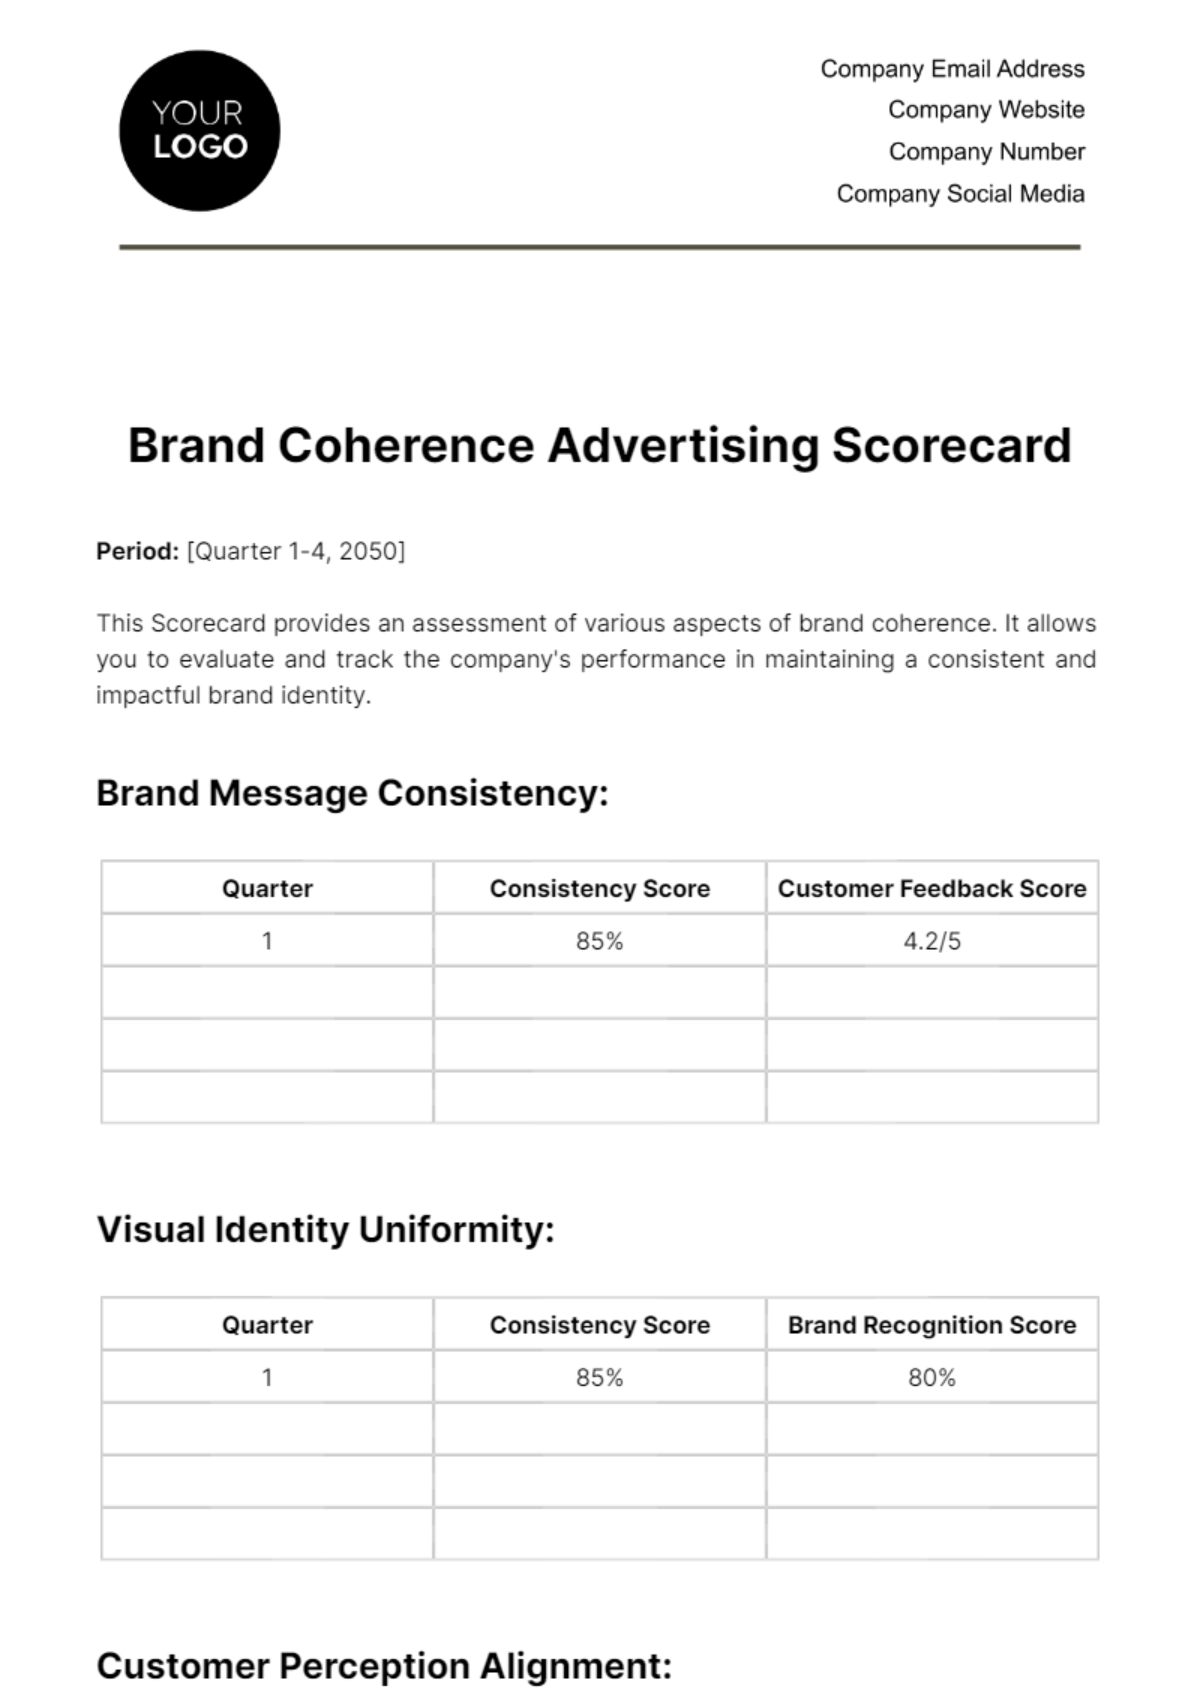 Brand Coherence Advertising Scorecard Template